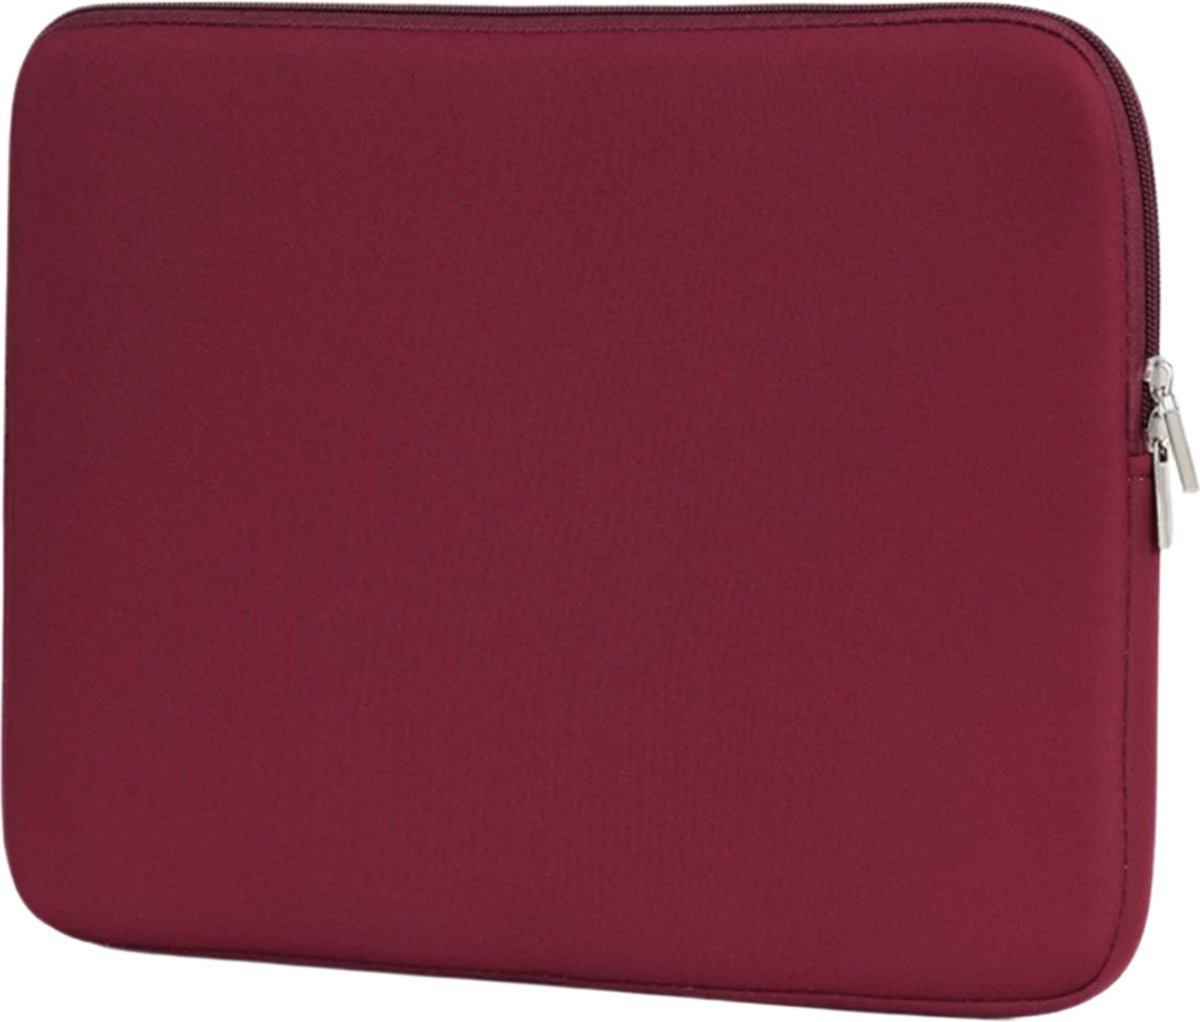 14,6 inch – laptophoes – sleeve – zeer goede kwaliteit – bordeaux rood - unisex - Soft Touch - spatwaterbestending